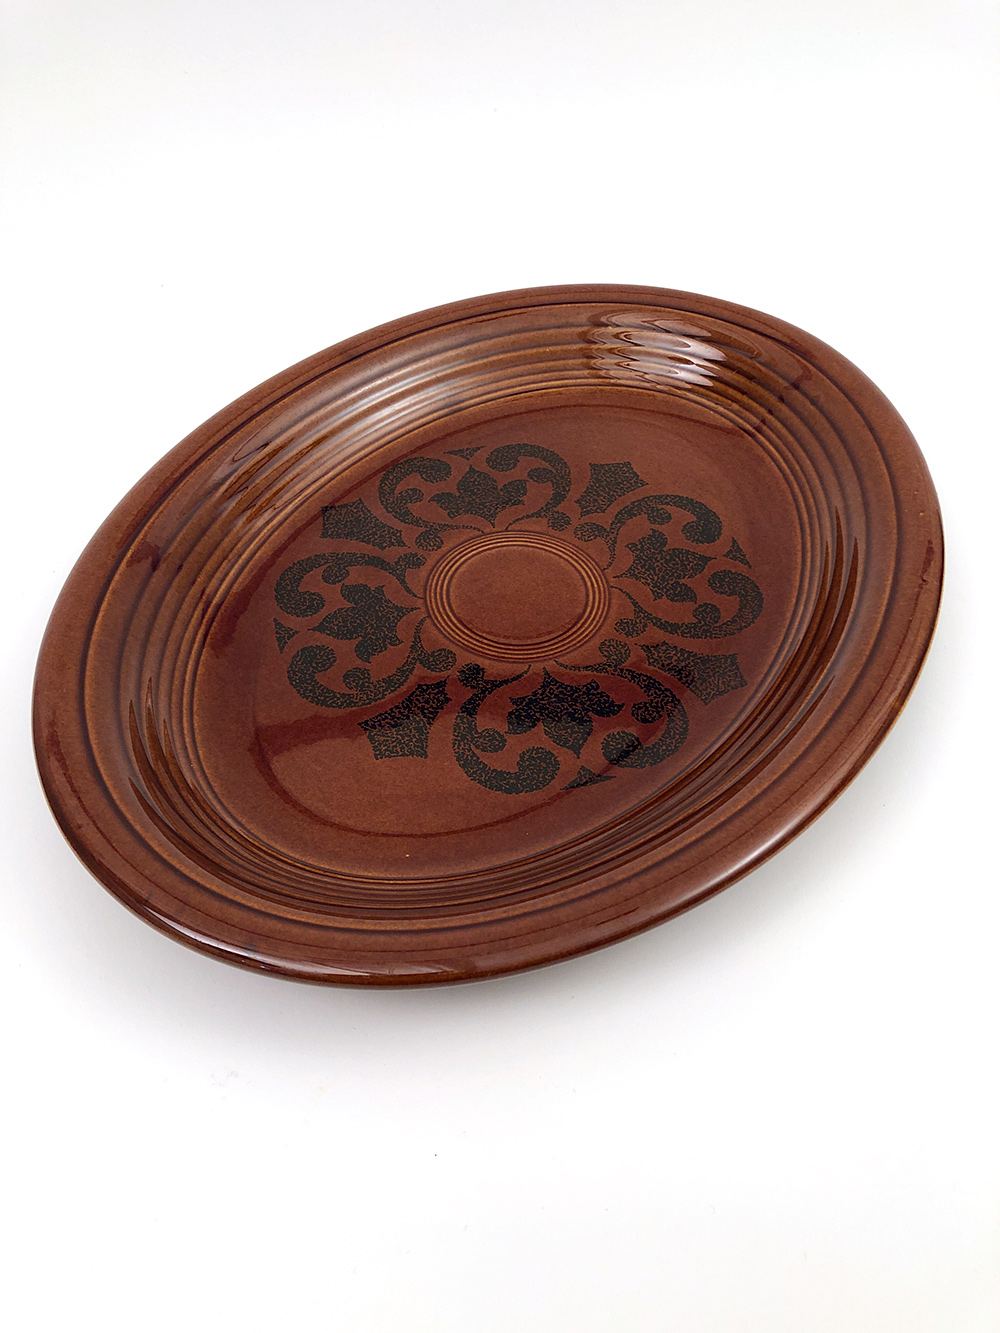 fiesta ironstone platter in amberstone dark brown